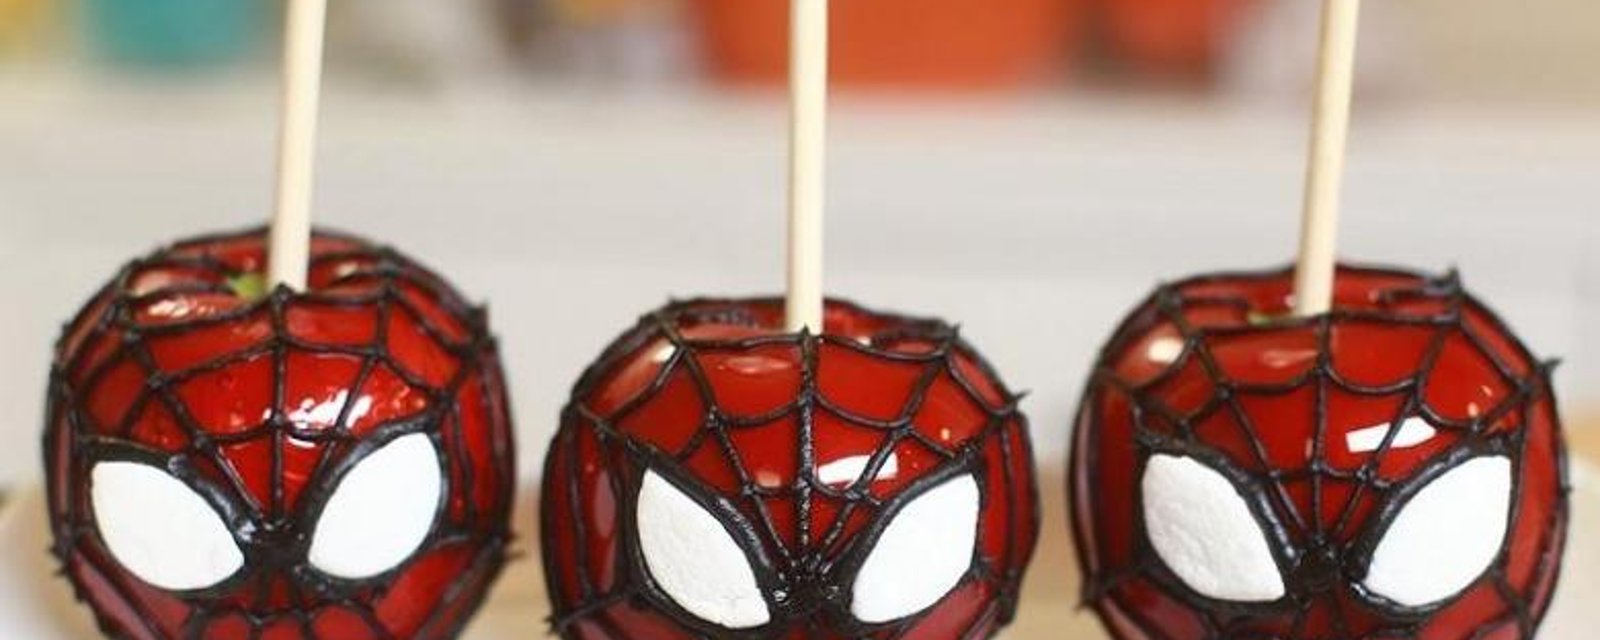 Les pommes Spiderman! 